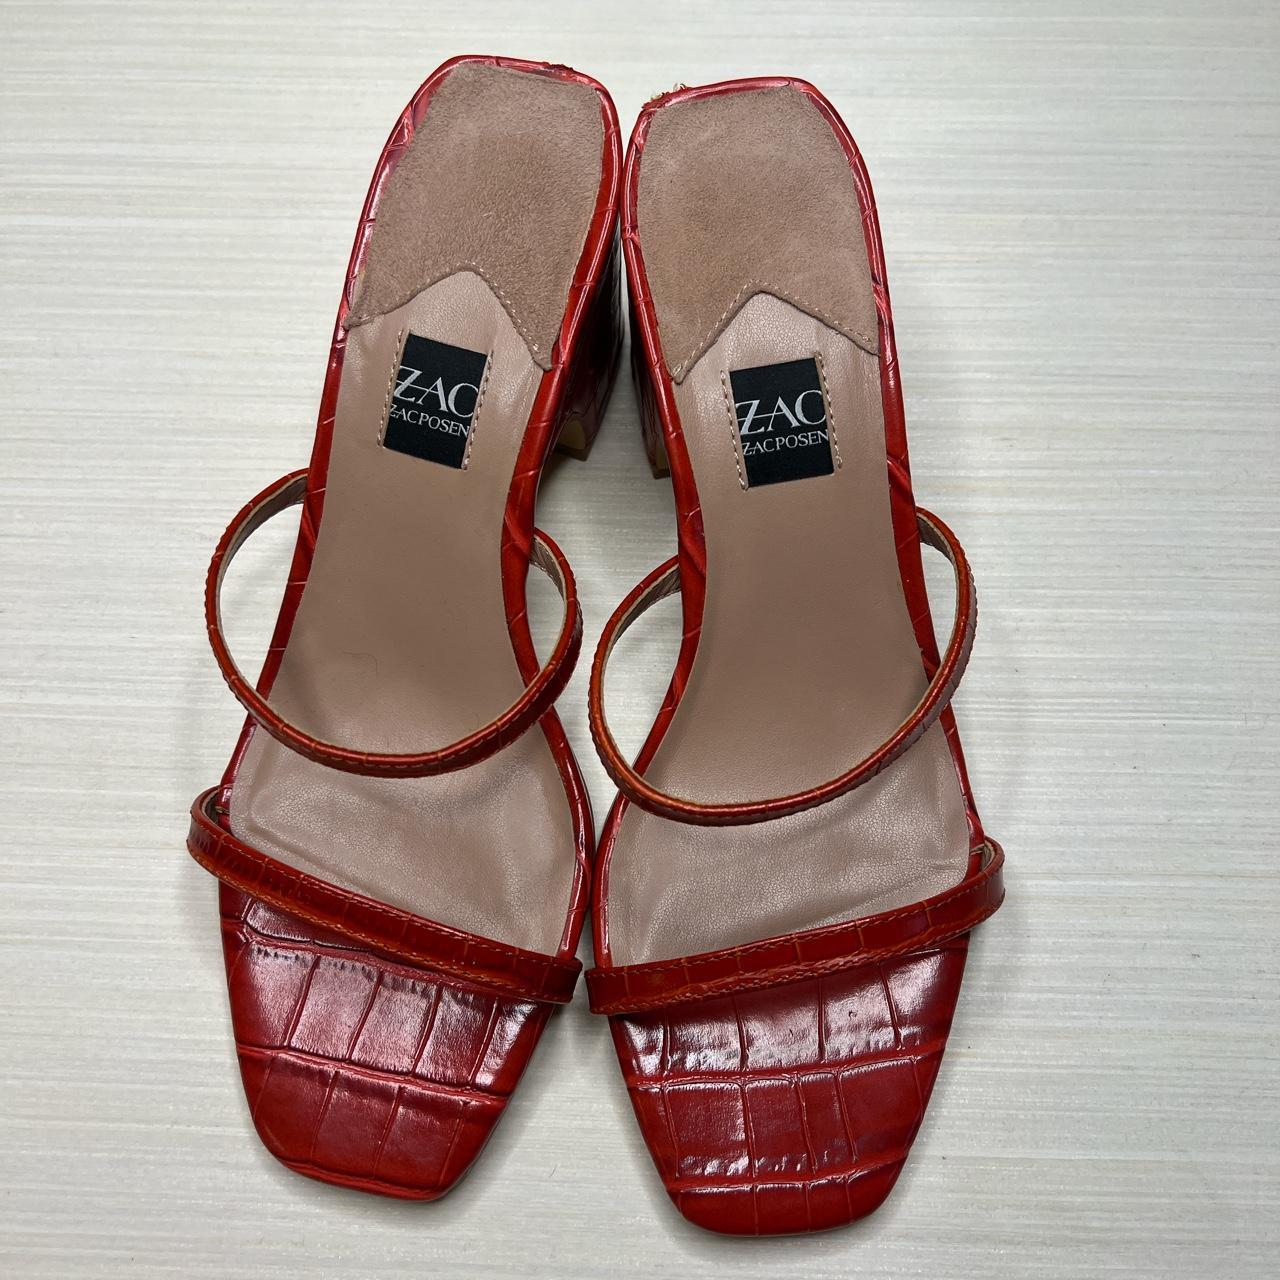 Zac Posen Women's Red Sandals